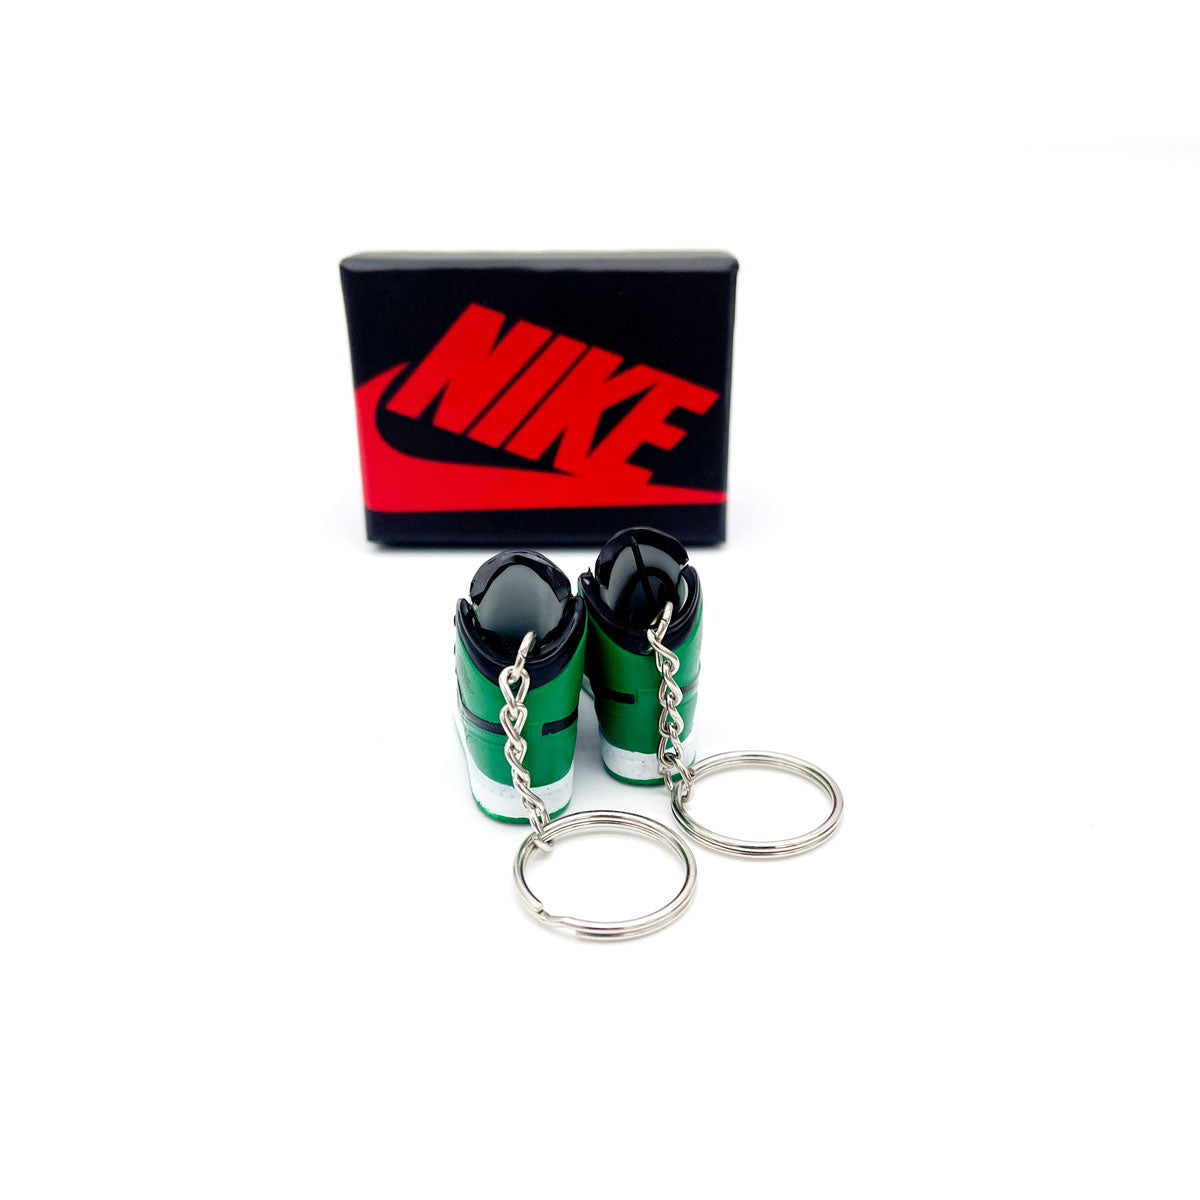 3D Sneaker Keychain- Air Jordan 1 Pine Green 2.0 Pair - KickzStore